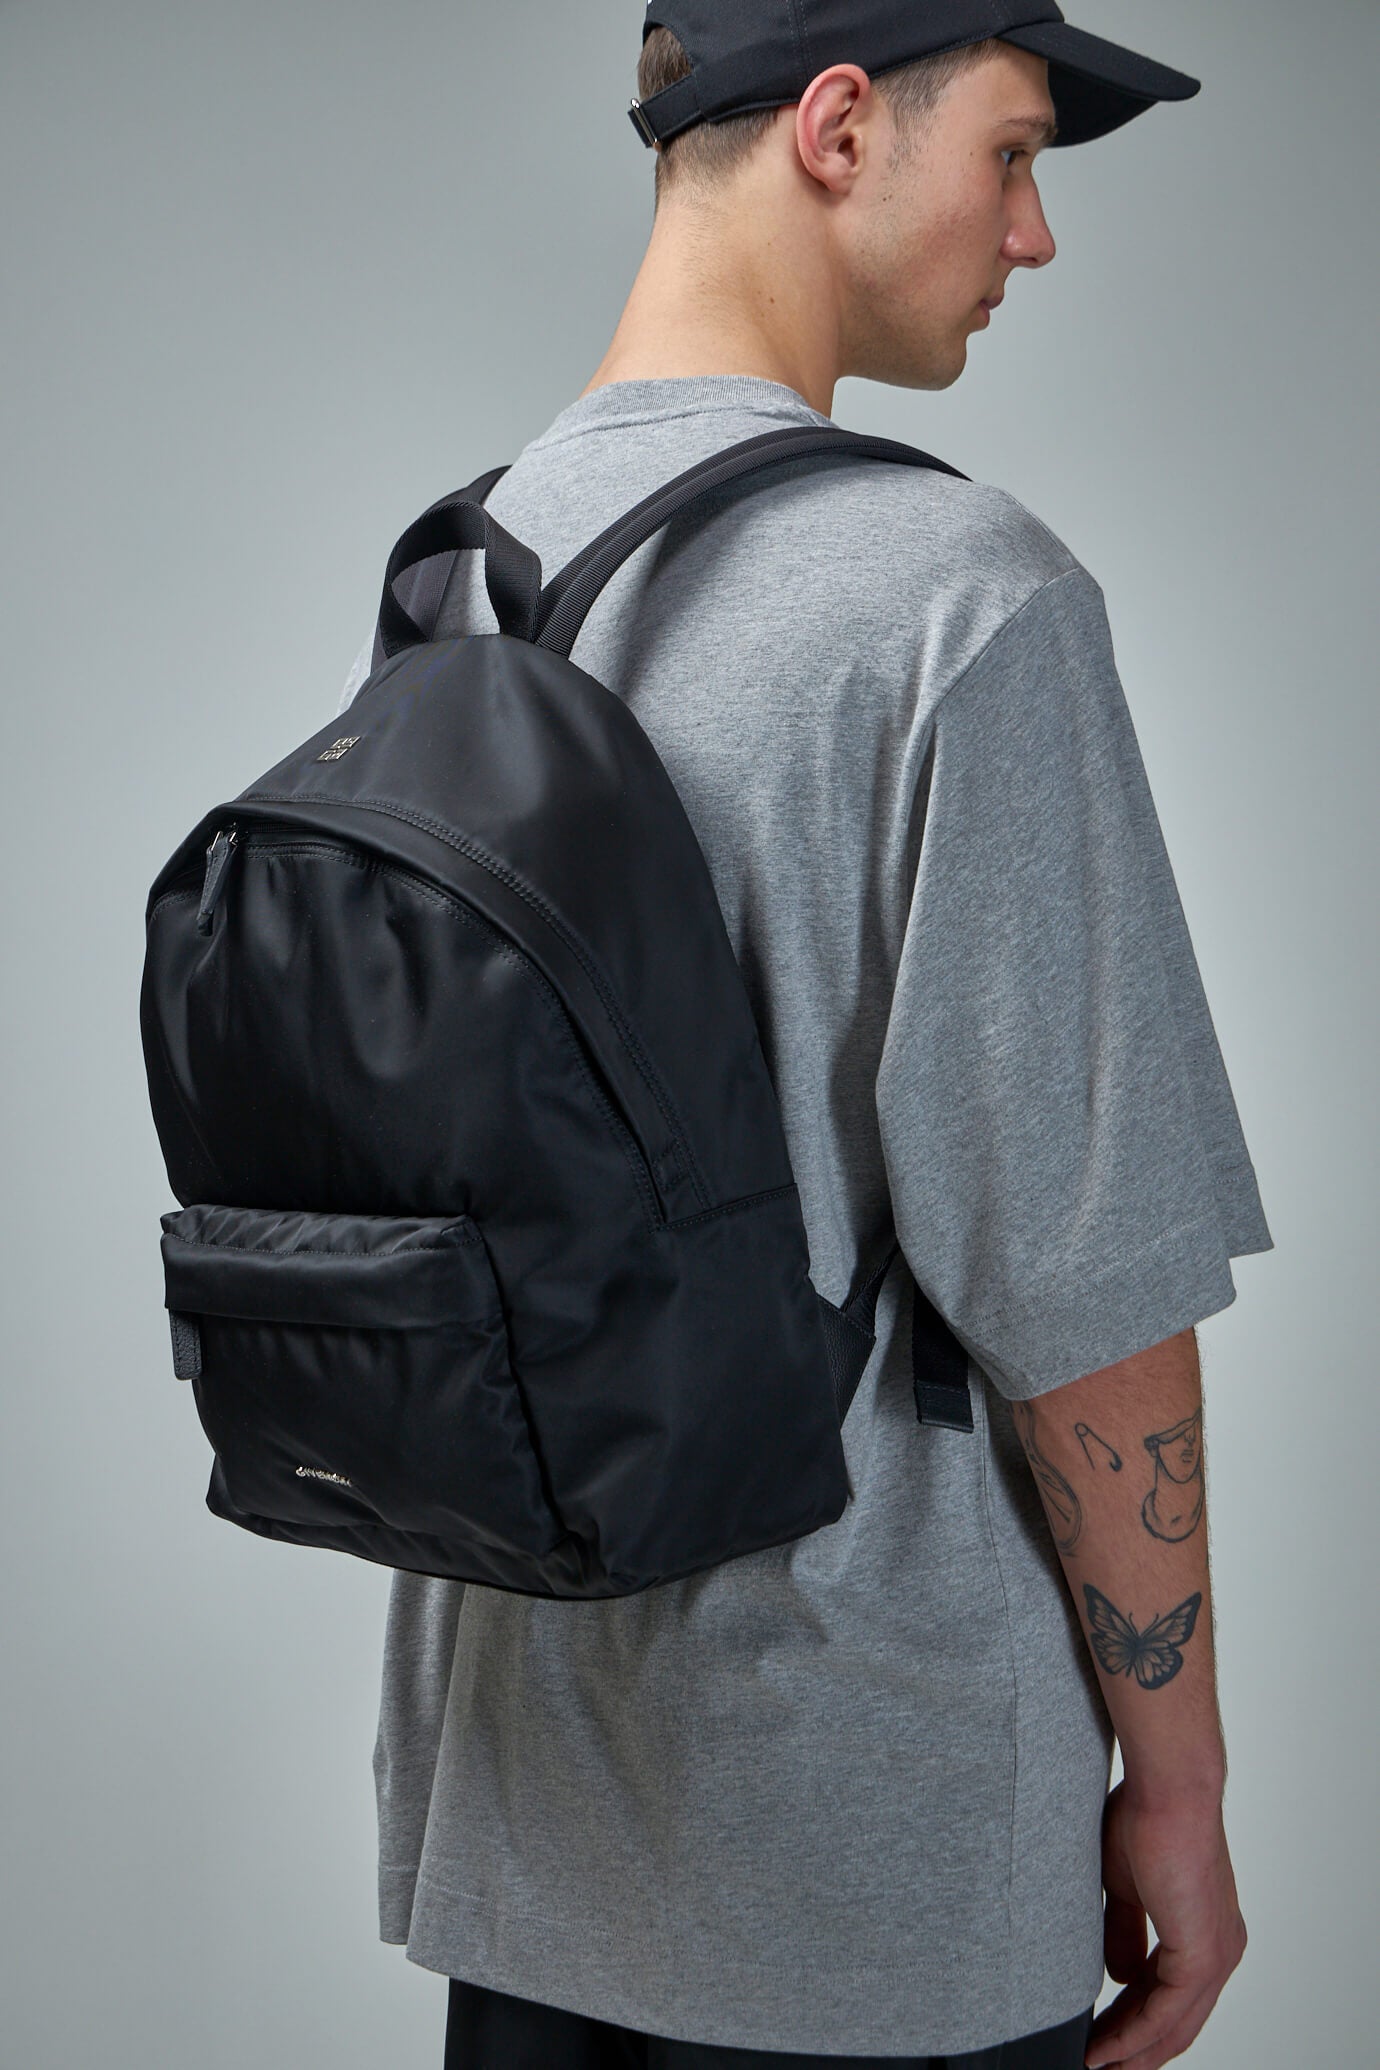 Essential U Backpack in Nylon